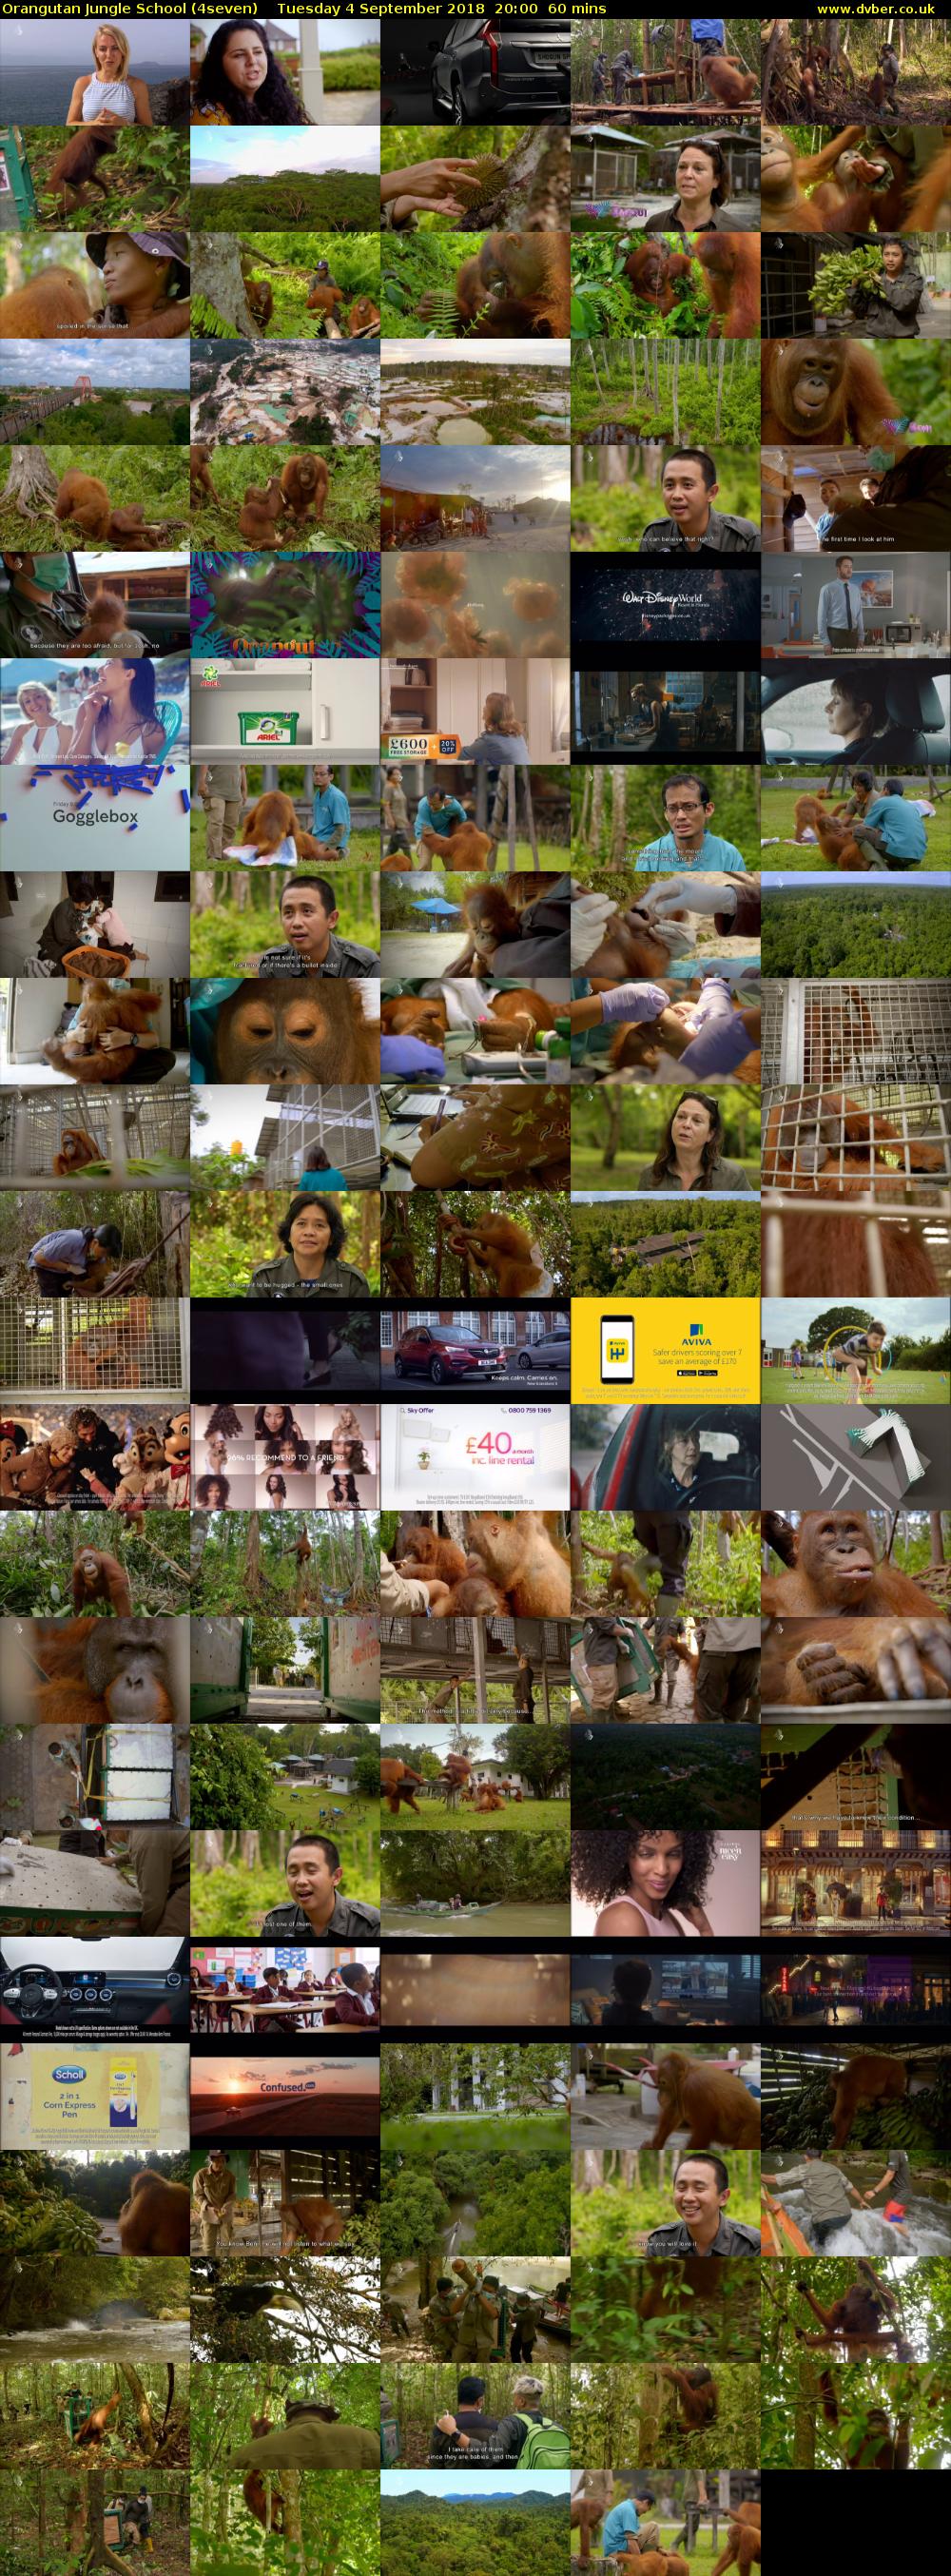 Orangutan Jungle School (4seven) Tuesday 4 September 2018 20:00 - 21:00